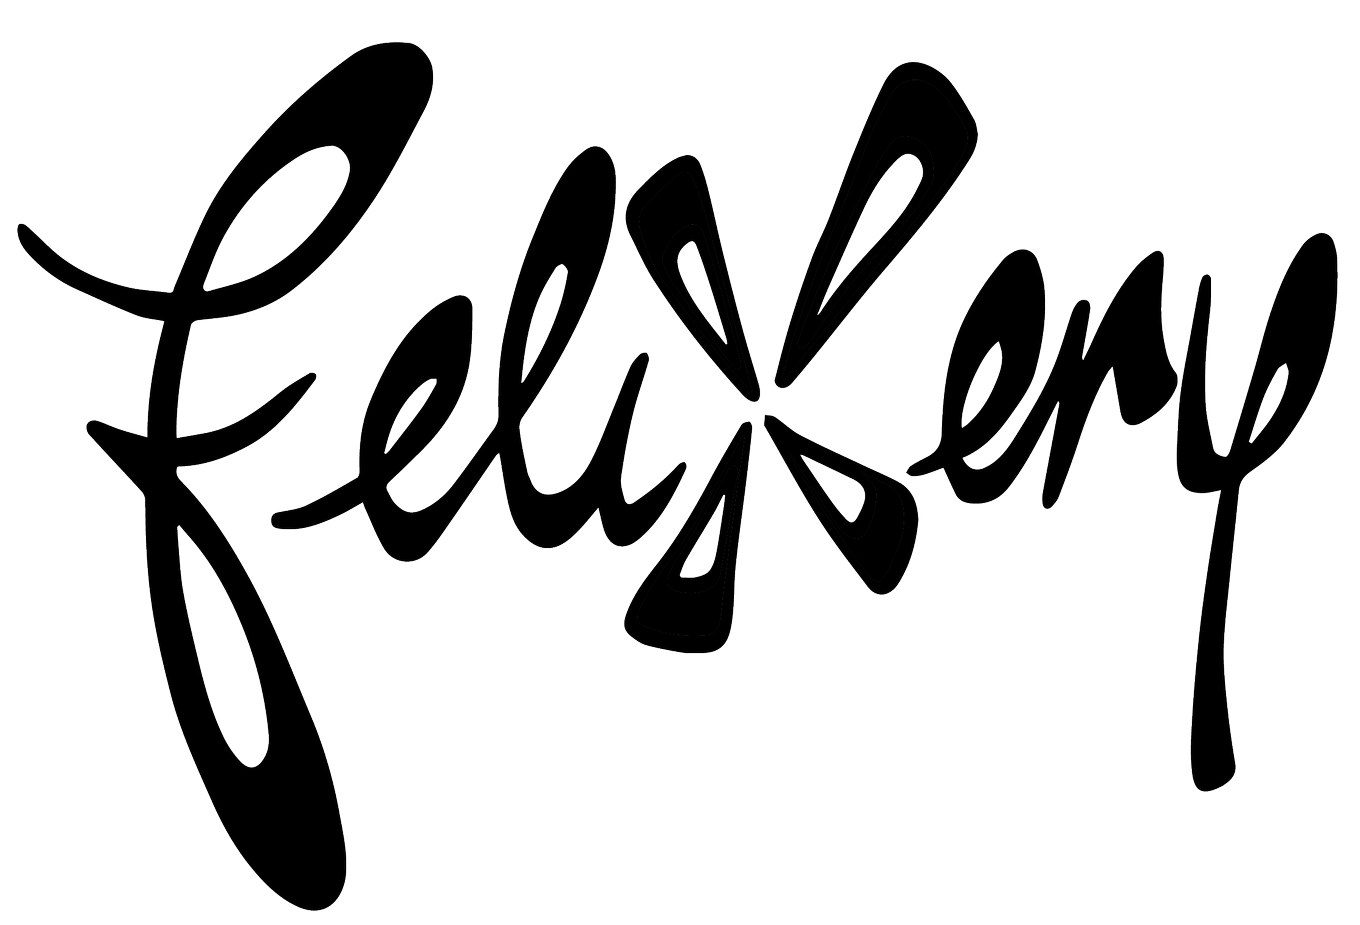 Felixery logo